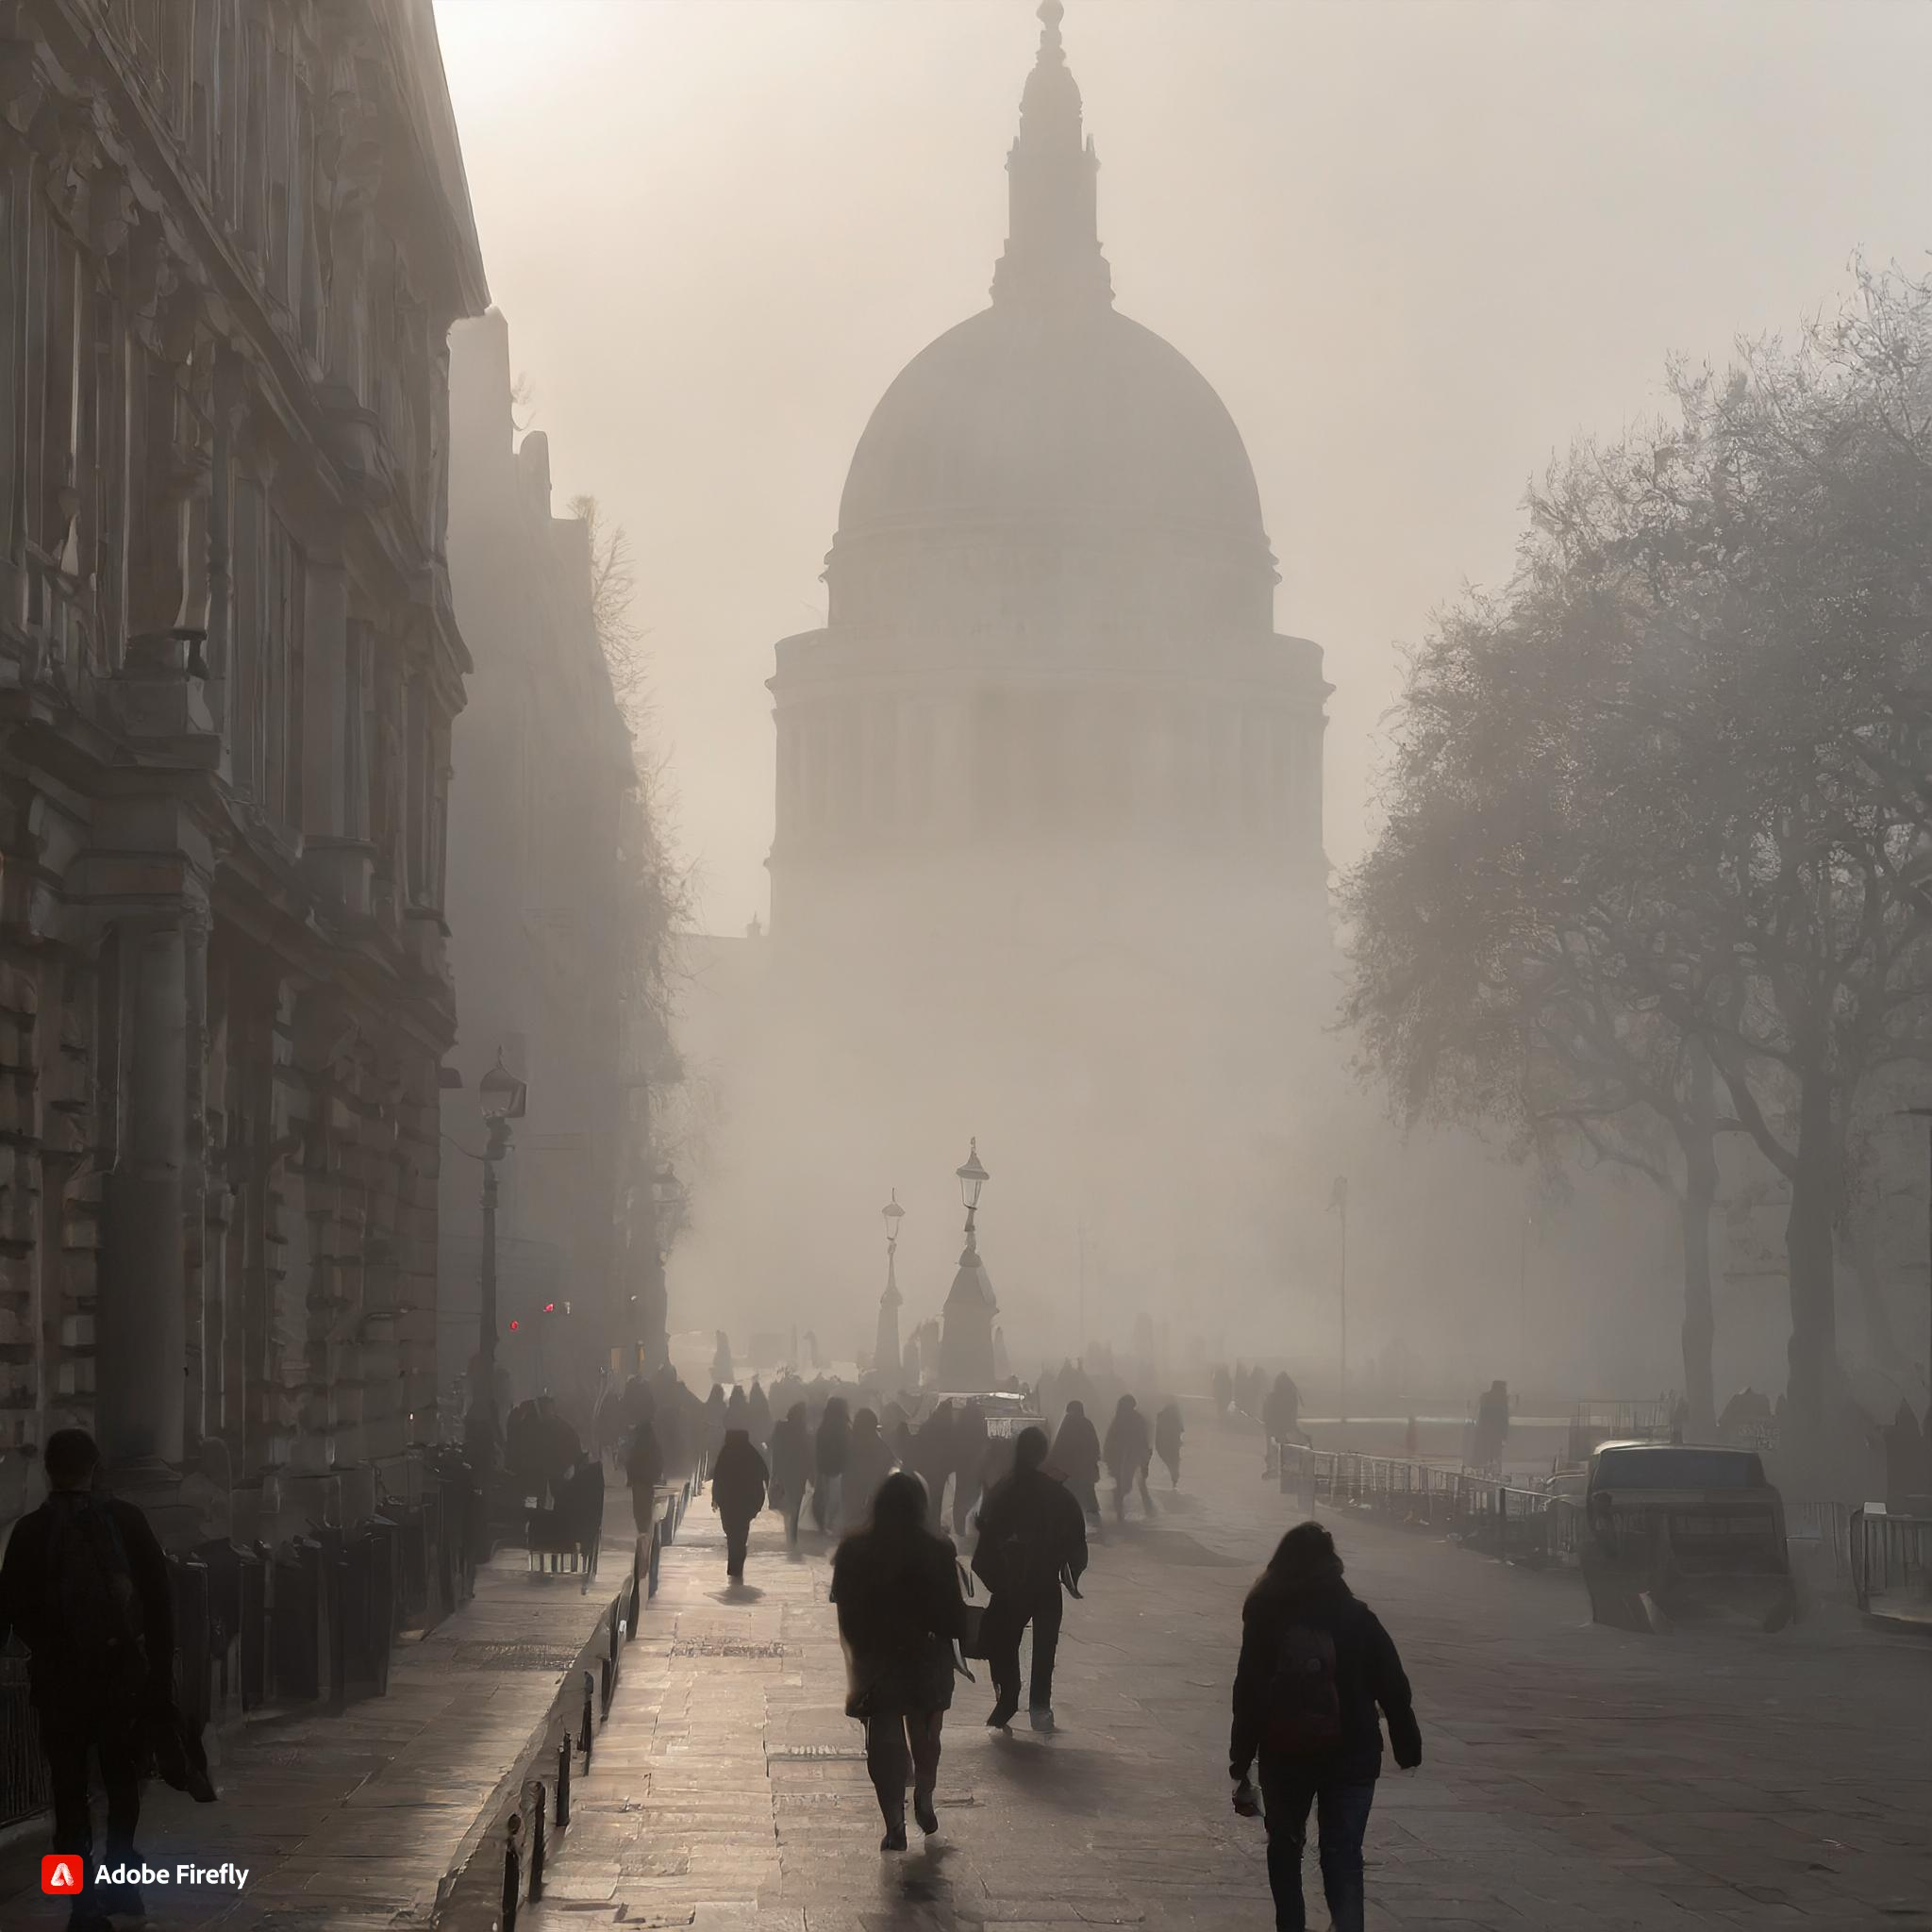  Firefly Misty, foggy morning of a busy eary london day 64025.jpg